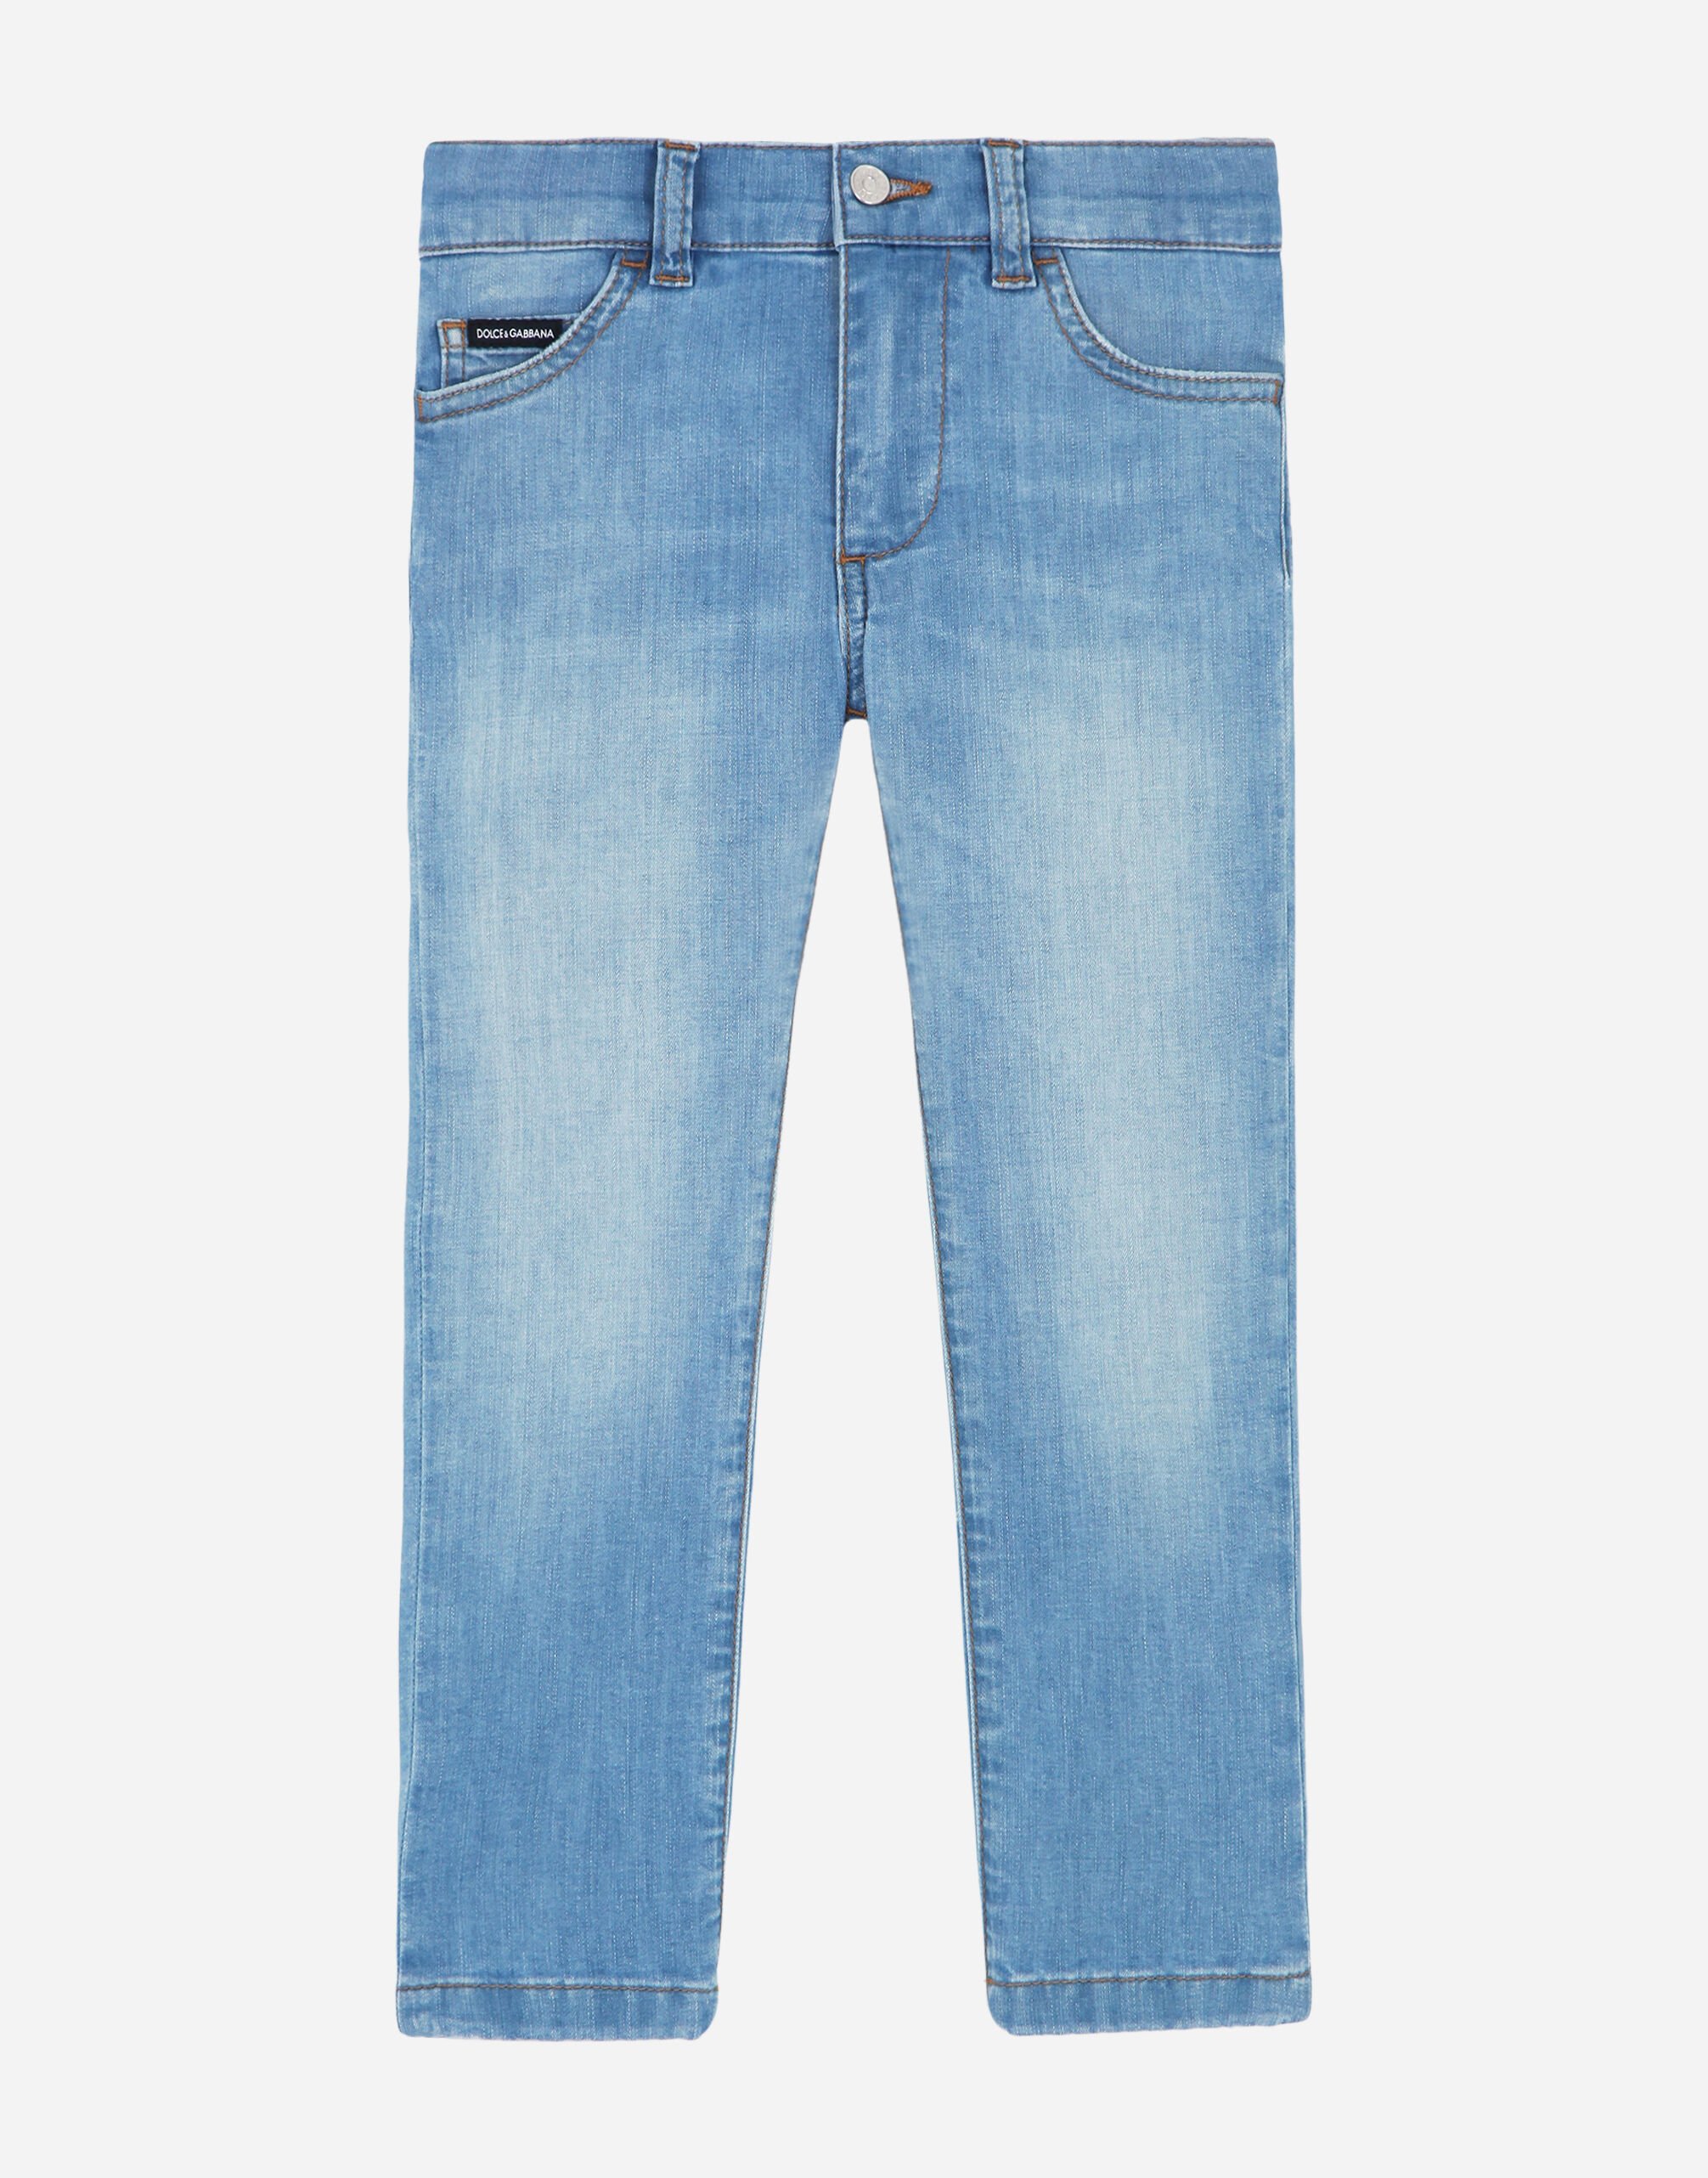 Dolce & Gabbana Stretch slim fit baby blue jeans Blue L41J68HUMMF